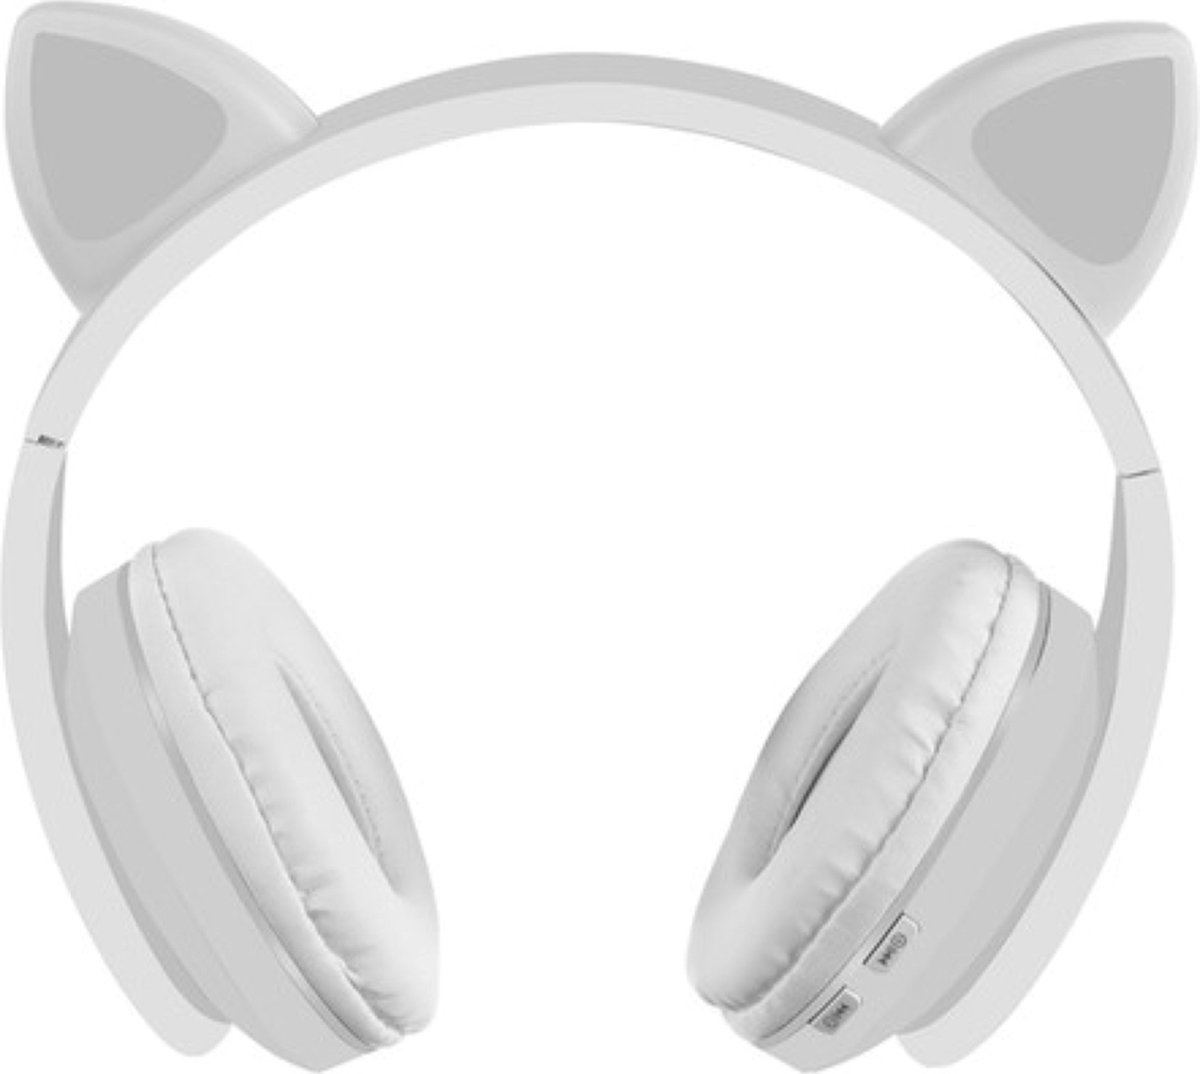 Oneiro's Luxe Wireless headphones with cat ears - white